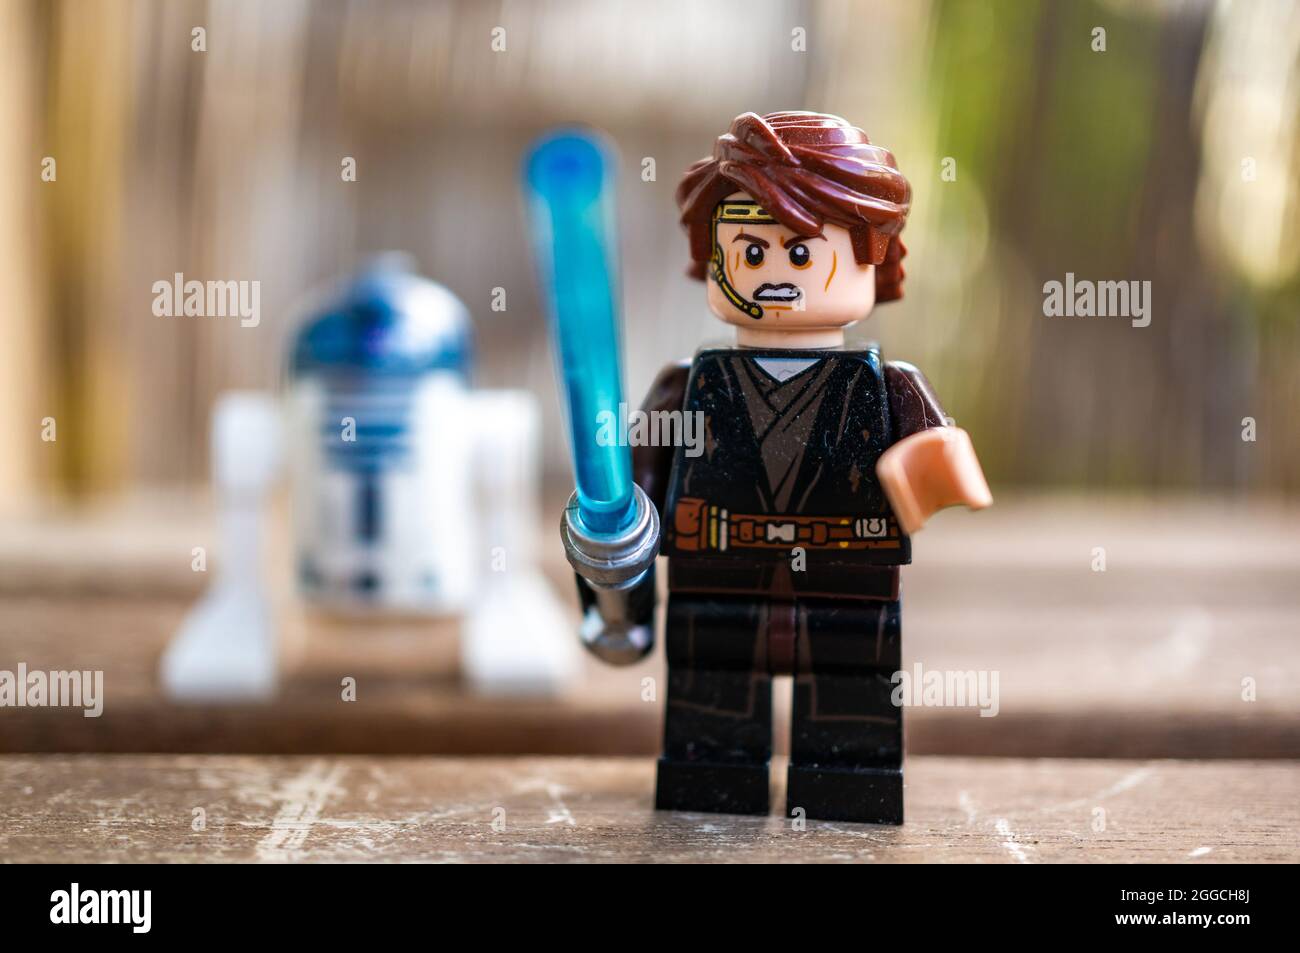 POZNAN, POLAND - Aug 09, 2021: The Lego Star Wars Anakin Skywalker toy figurine holding a blue laser sword Stock Photo